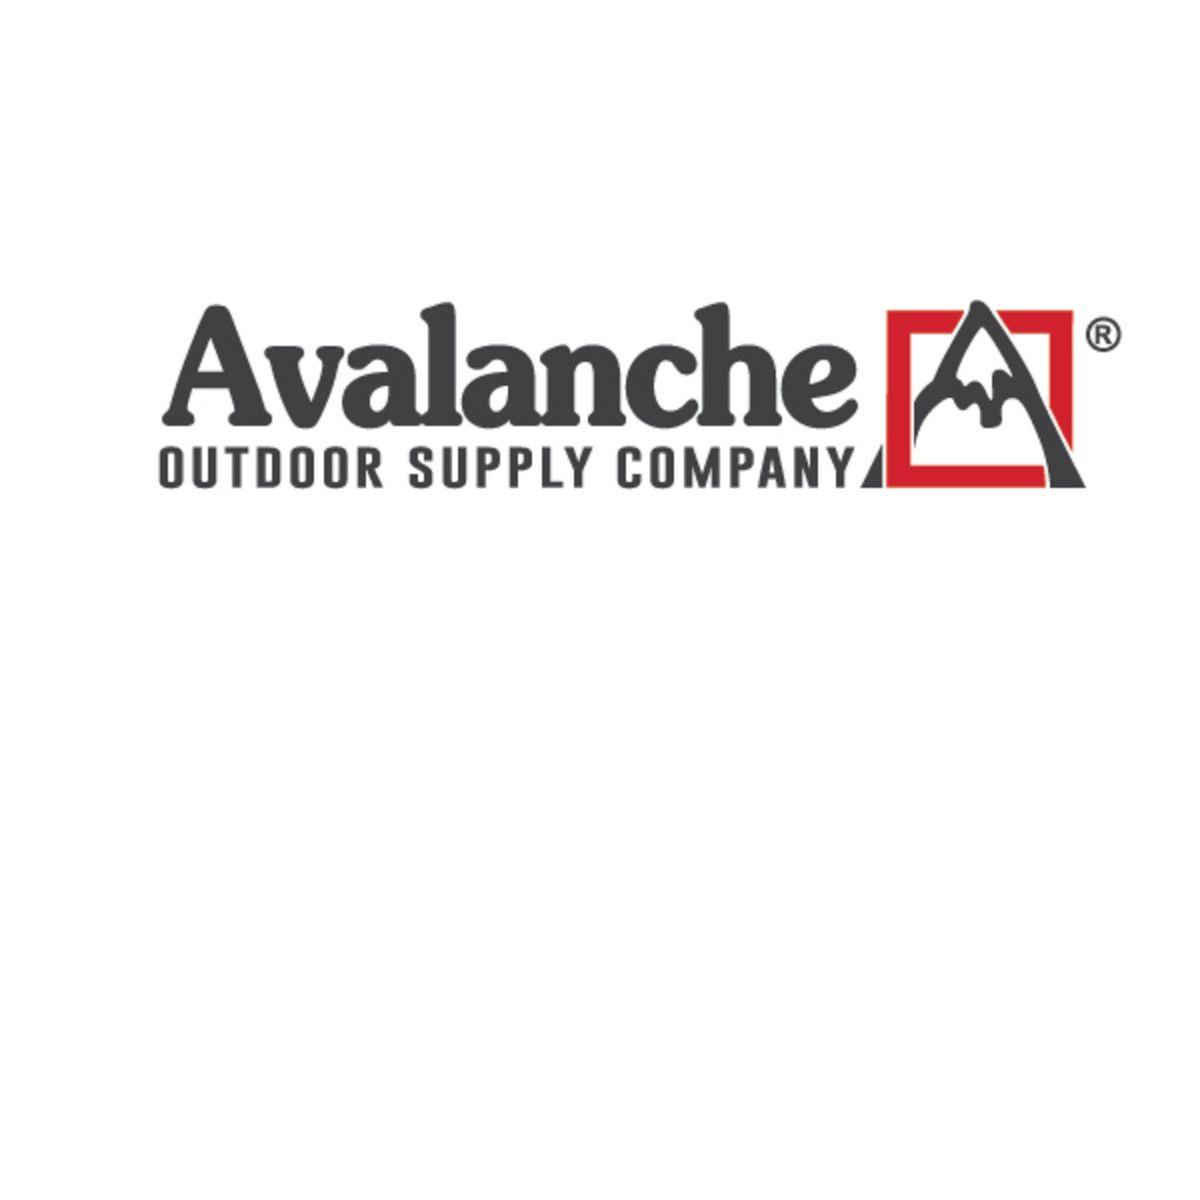 Avalance Logo - Avalanche Introduces Polygiene Baselayers for Fall 2018